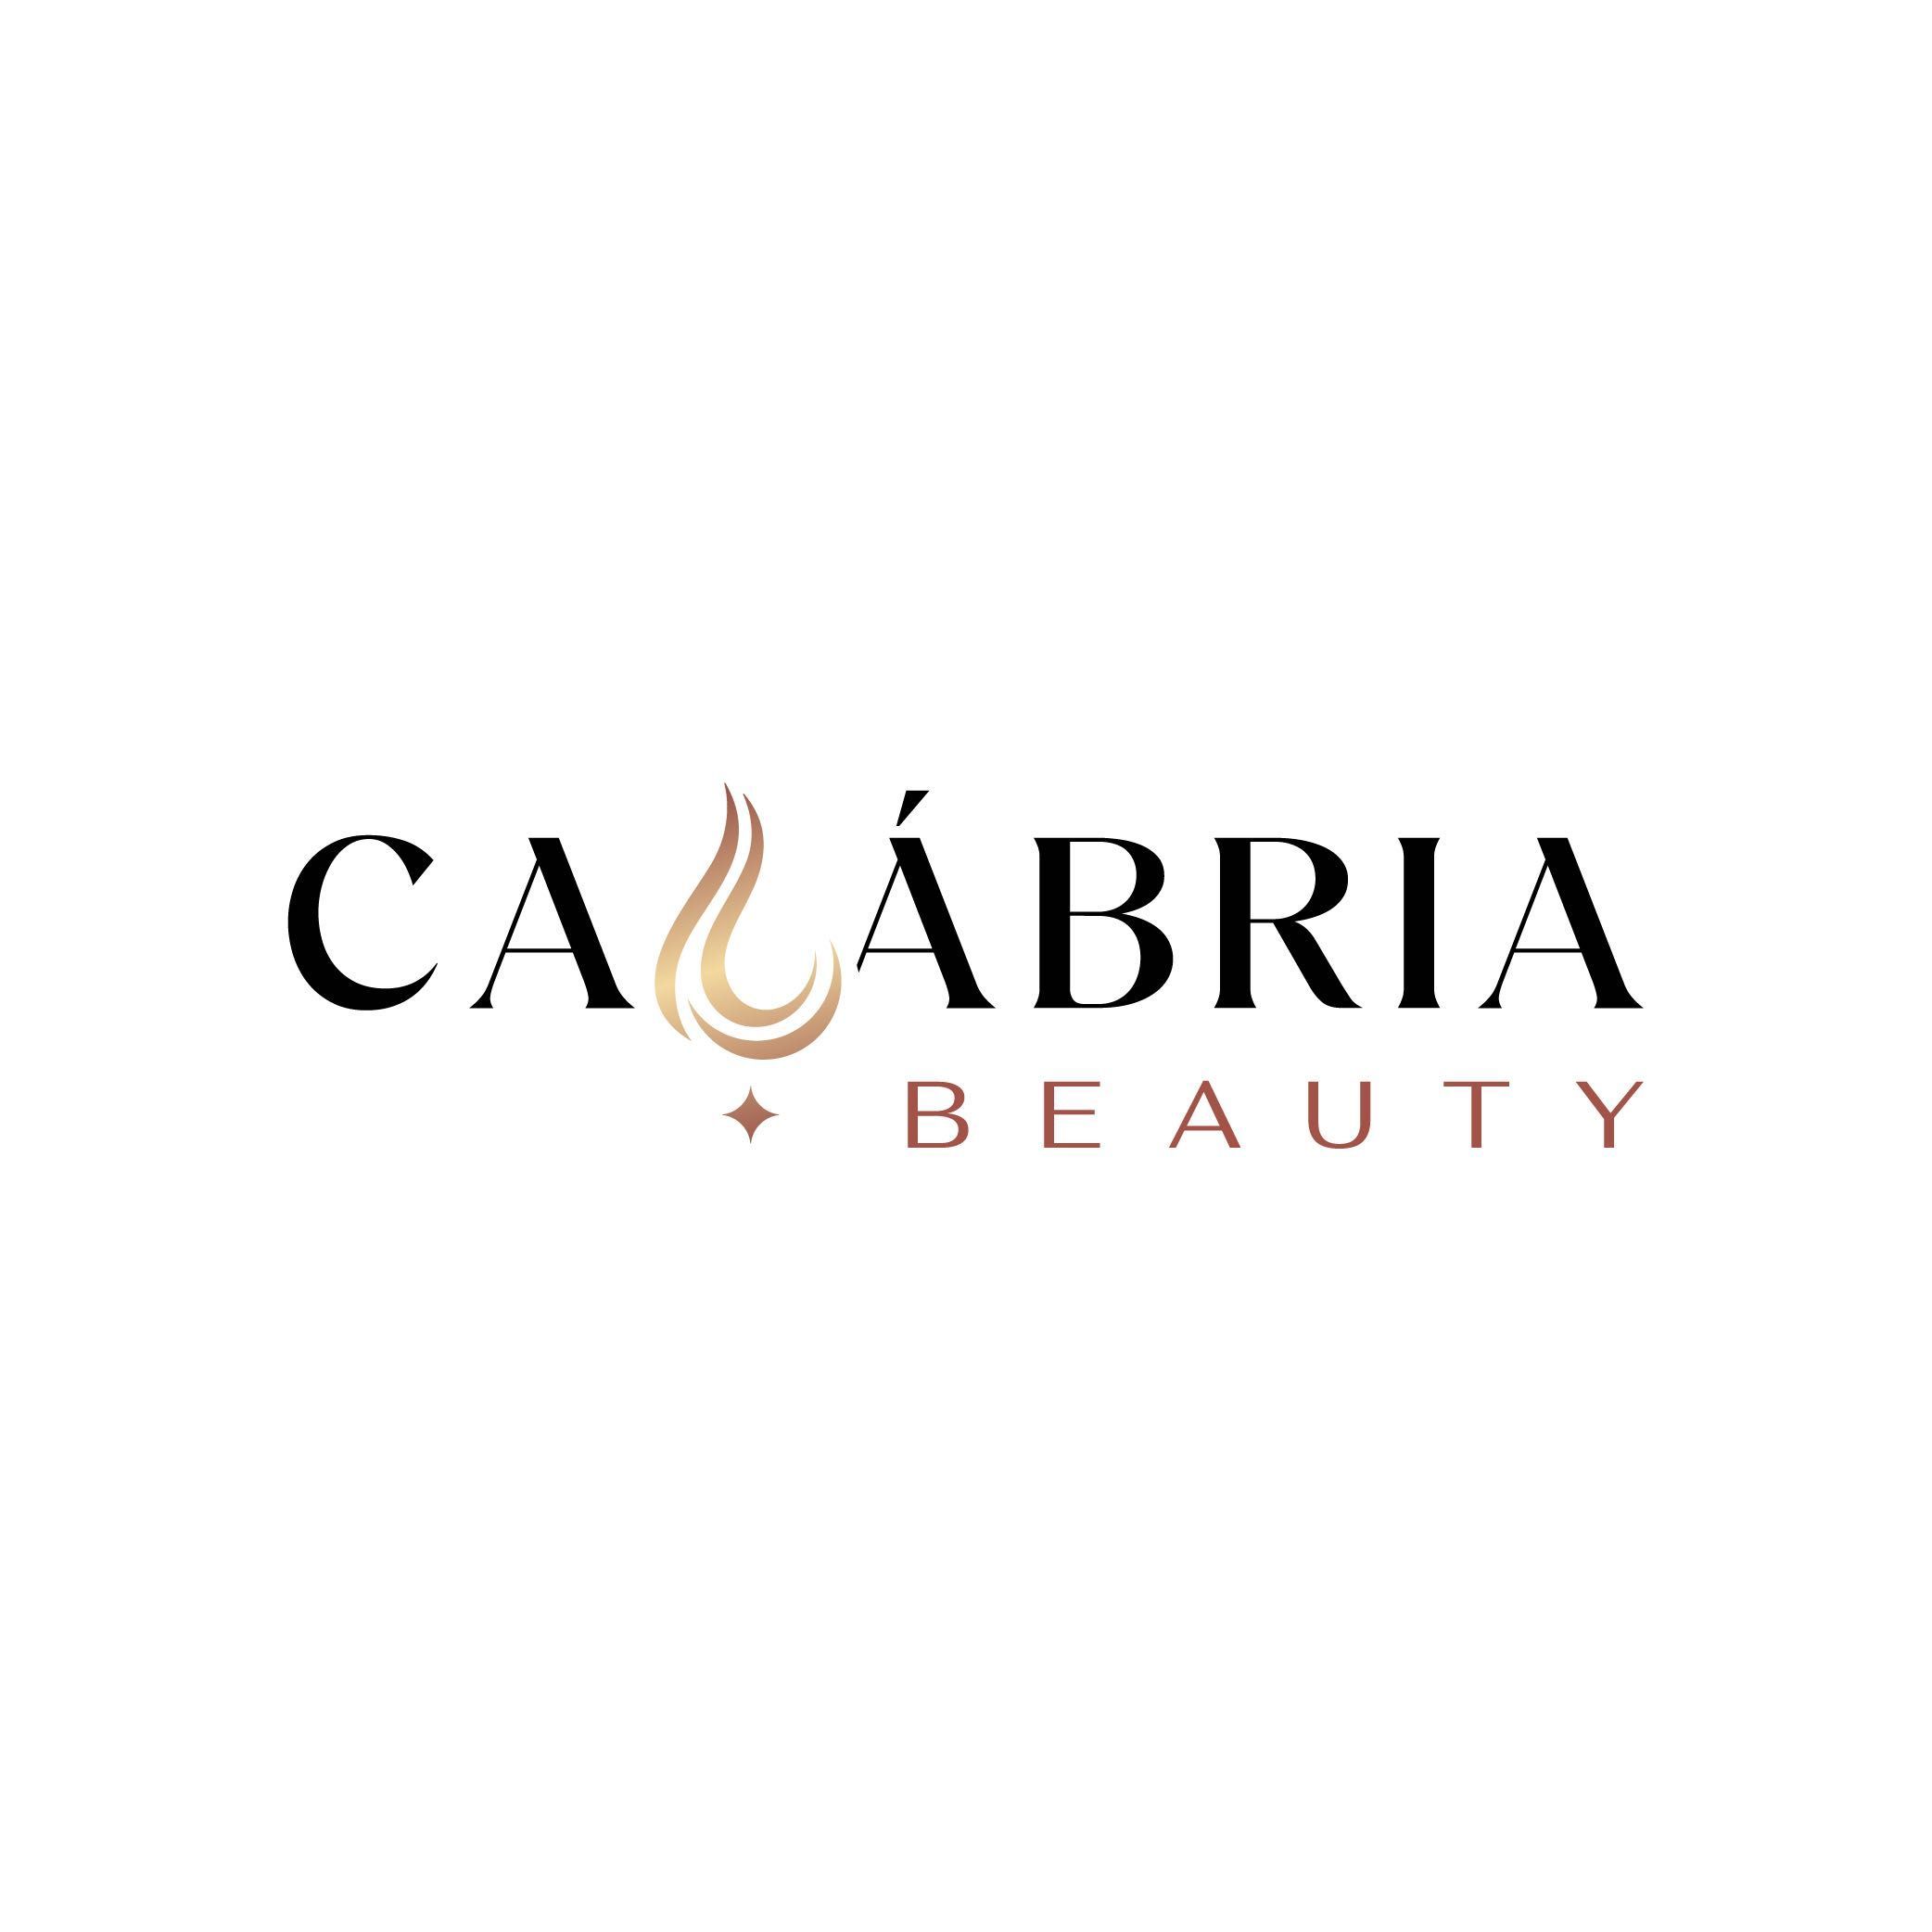 Lorena Calábria Beauty, Avenida do Comércio, 93, 93, 35470-000, Moeda